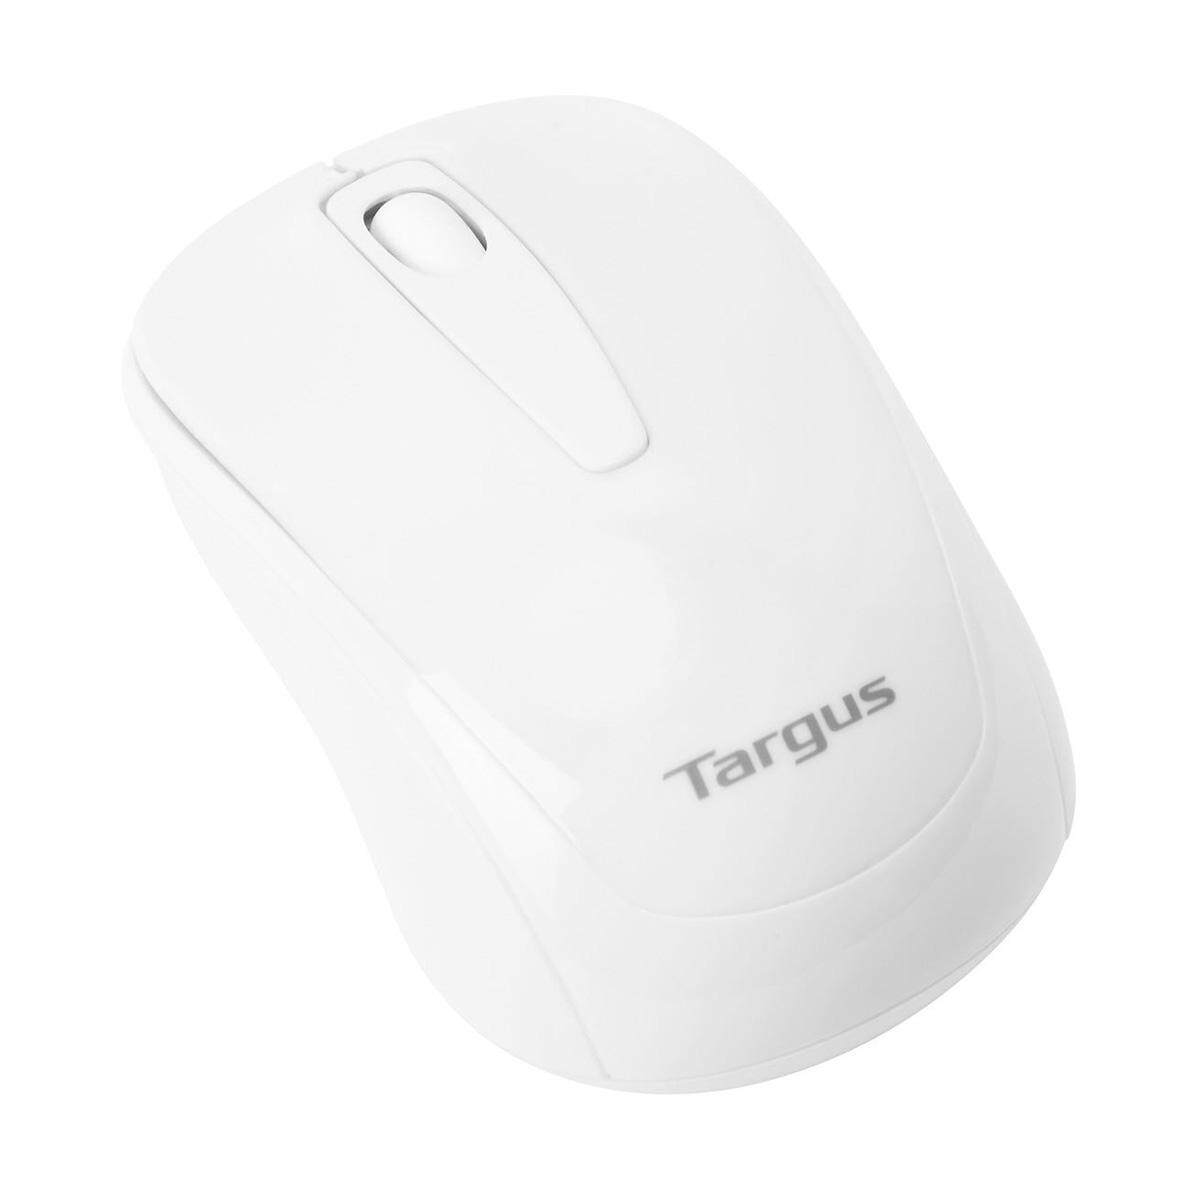 TARGUS WIRELESS OPTICAL MOUSE W600 | 1600DPI 2.4GHZ WITH USB RECEIVER